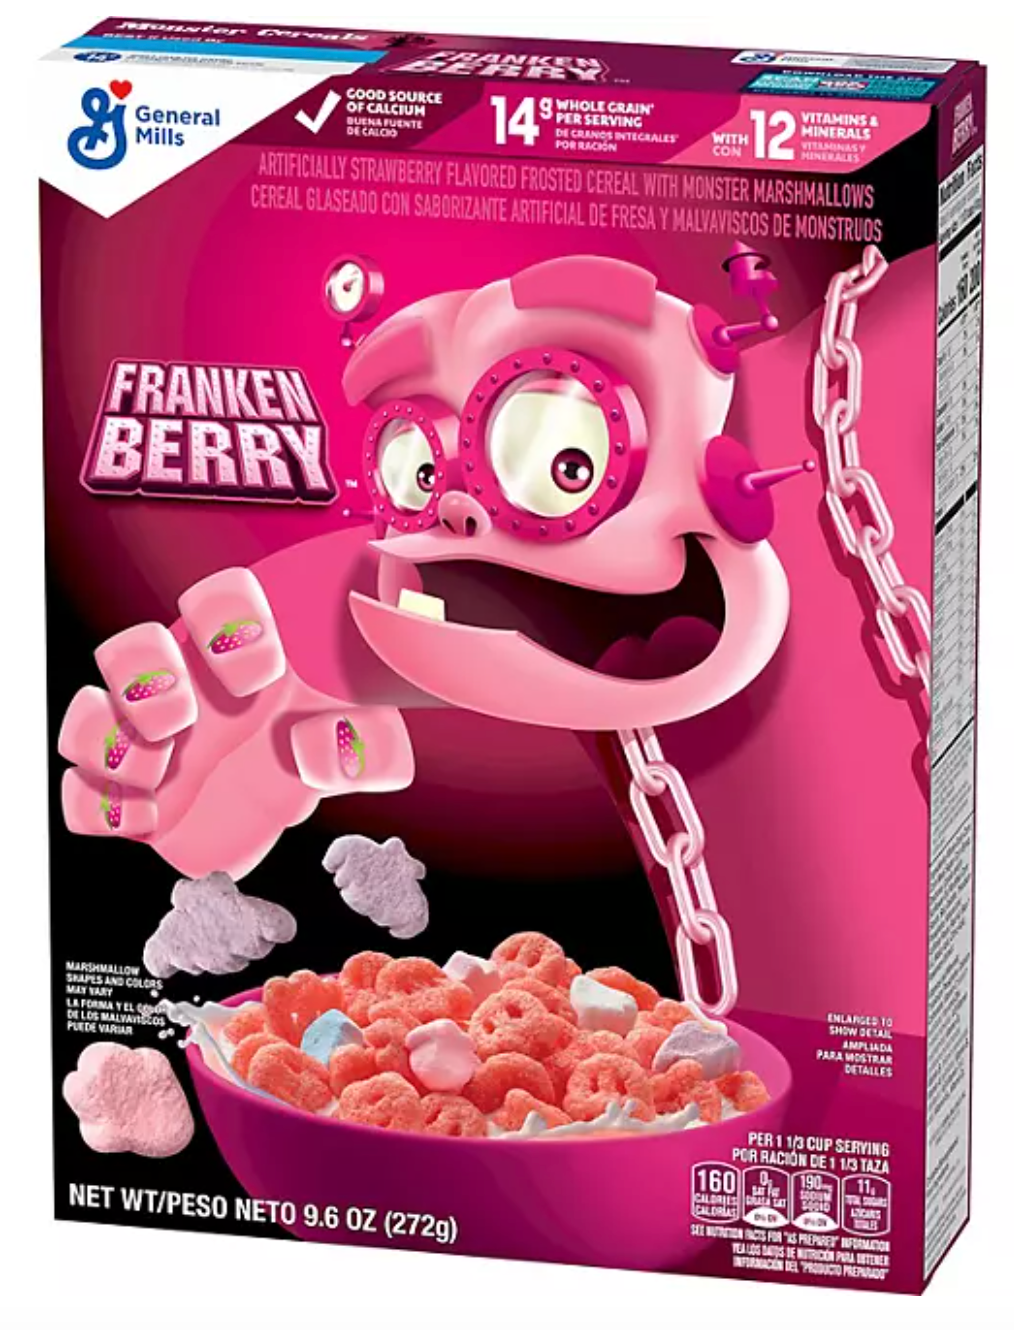 Monsters Breakfast Cereal Quadruple Variety Pack, 2.4lb 1102g